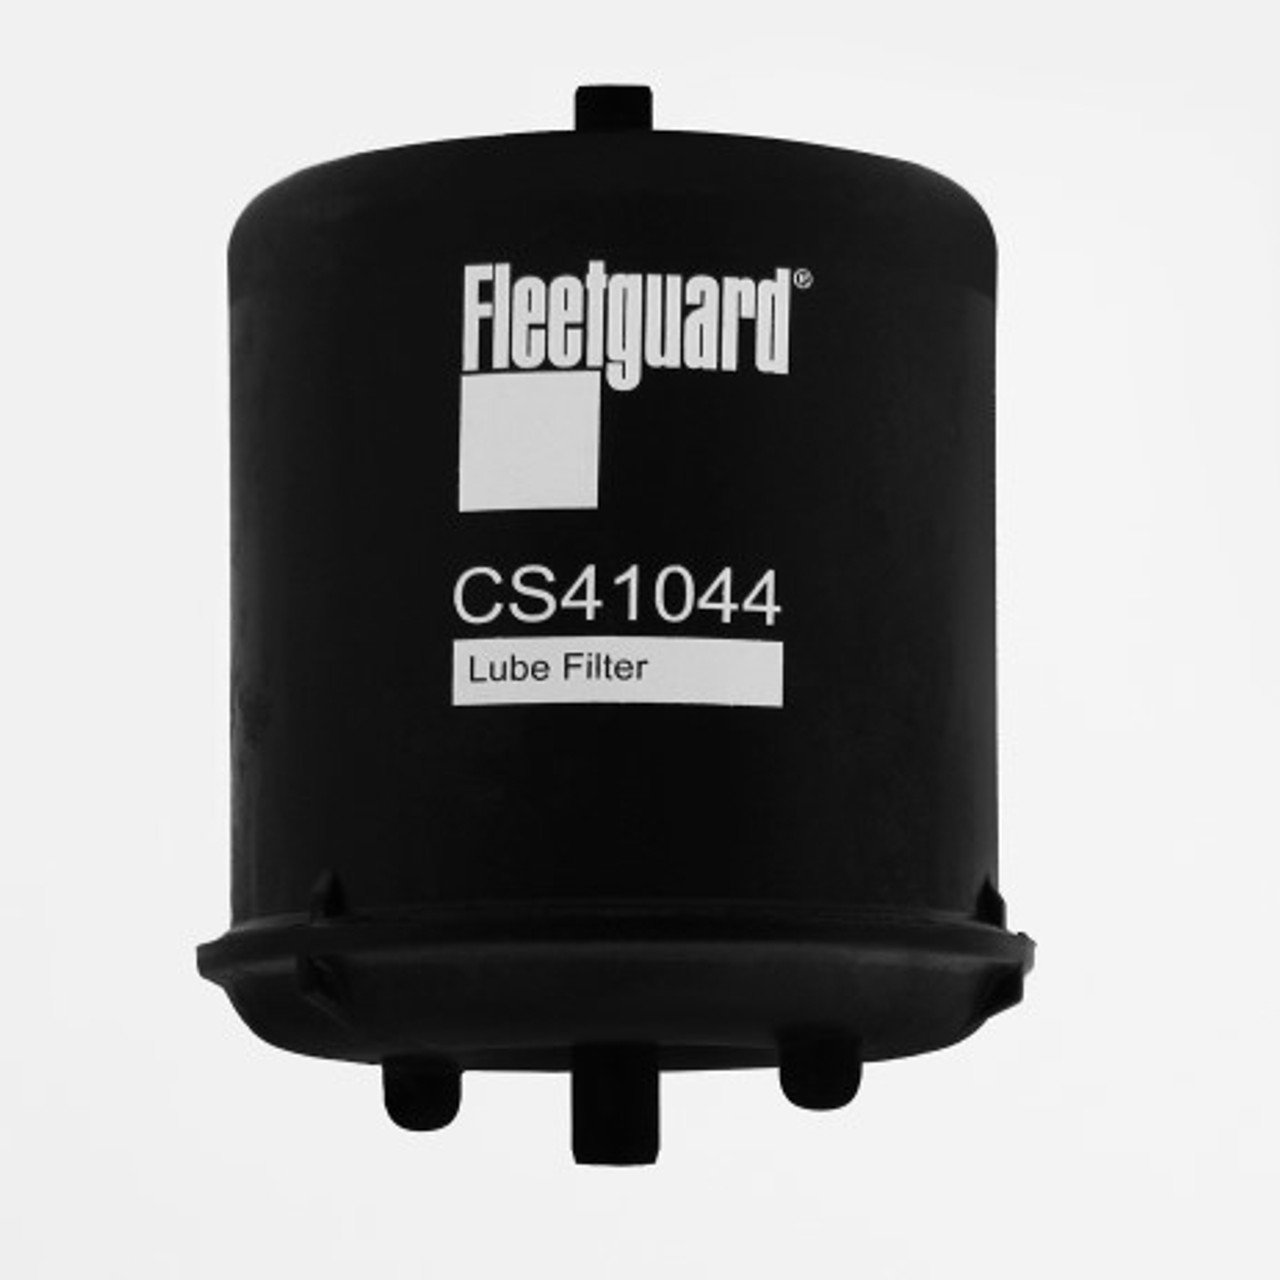 CS41044, Fleetguard Centrifuge Assembly